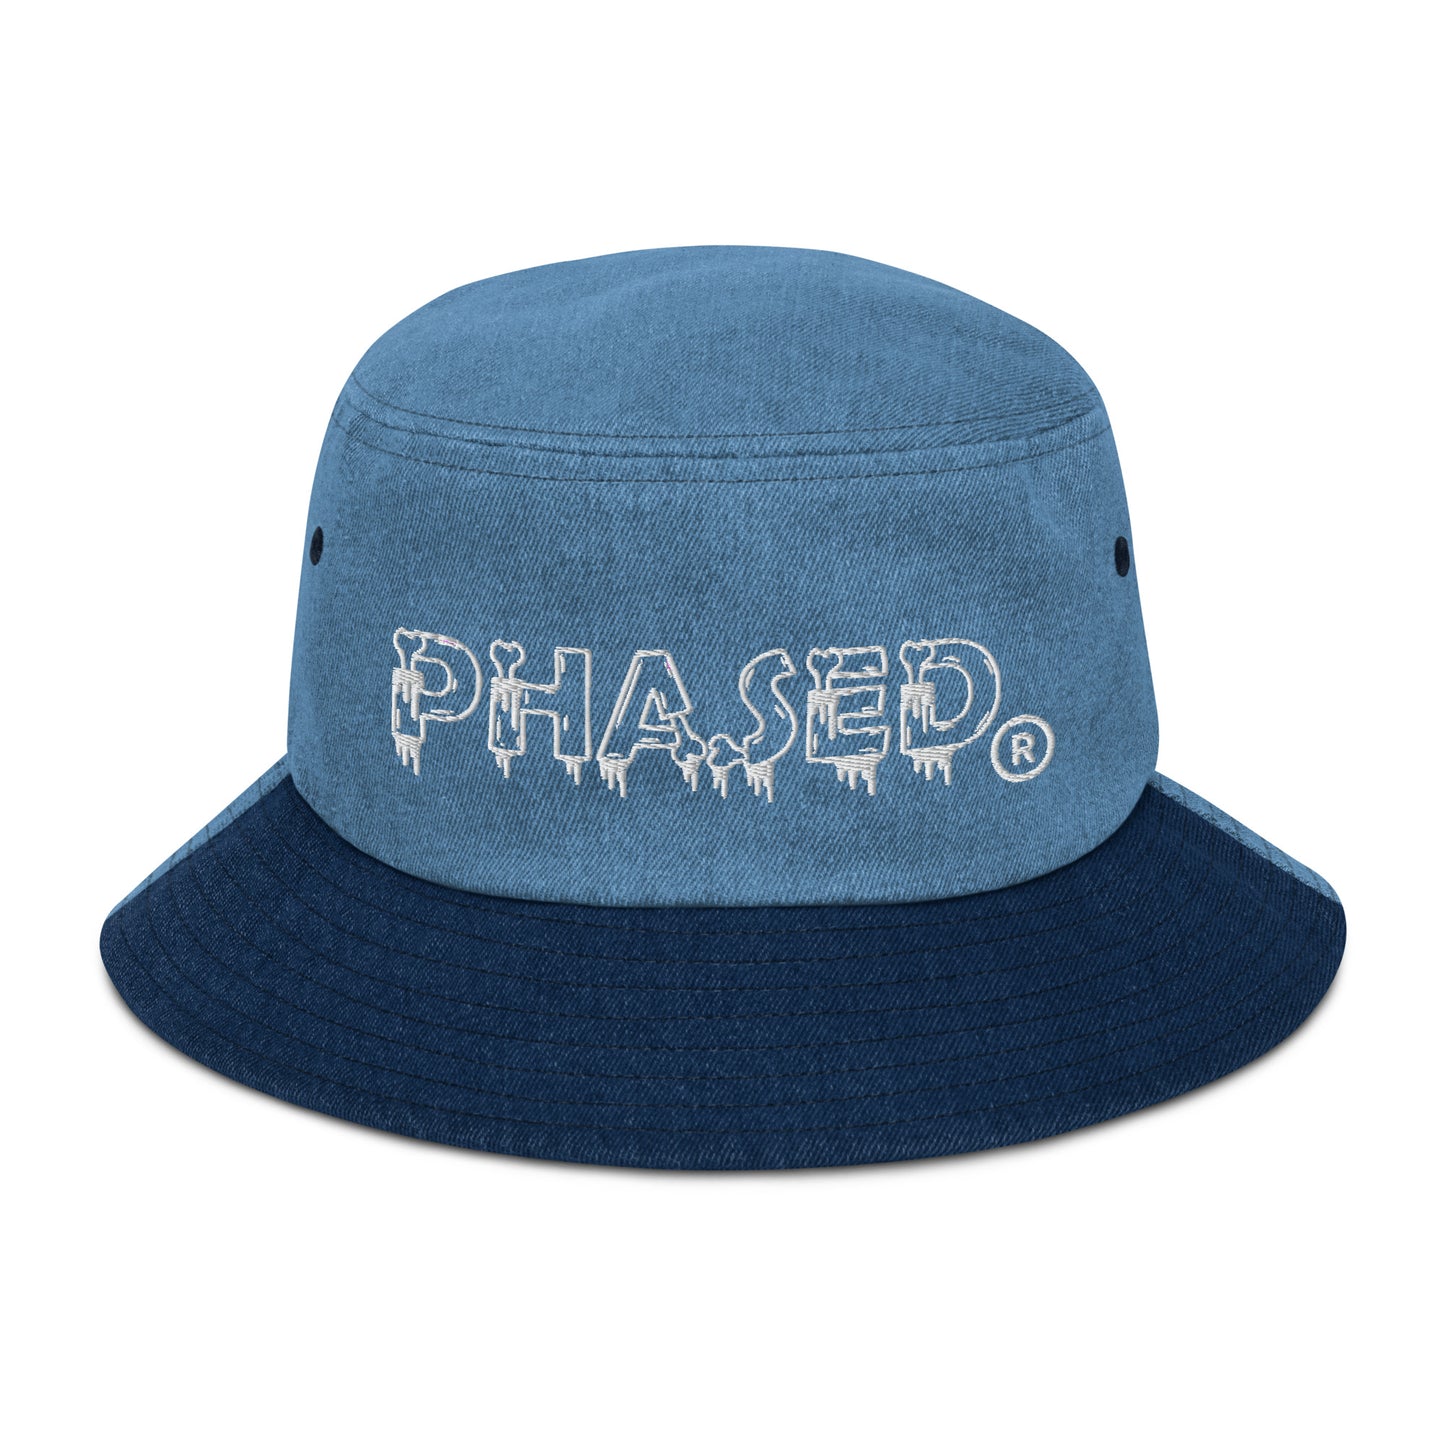 Phased Denim Hat